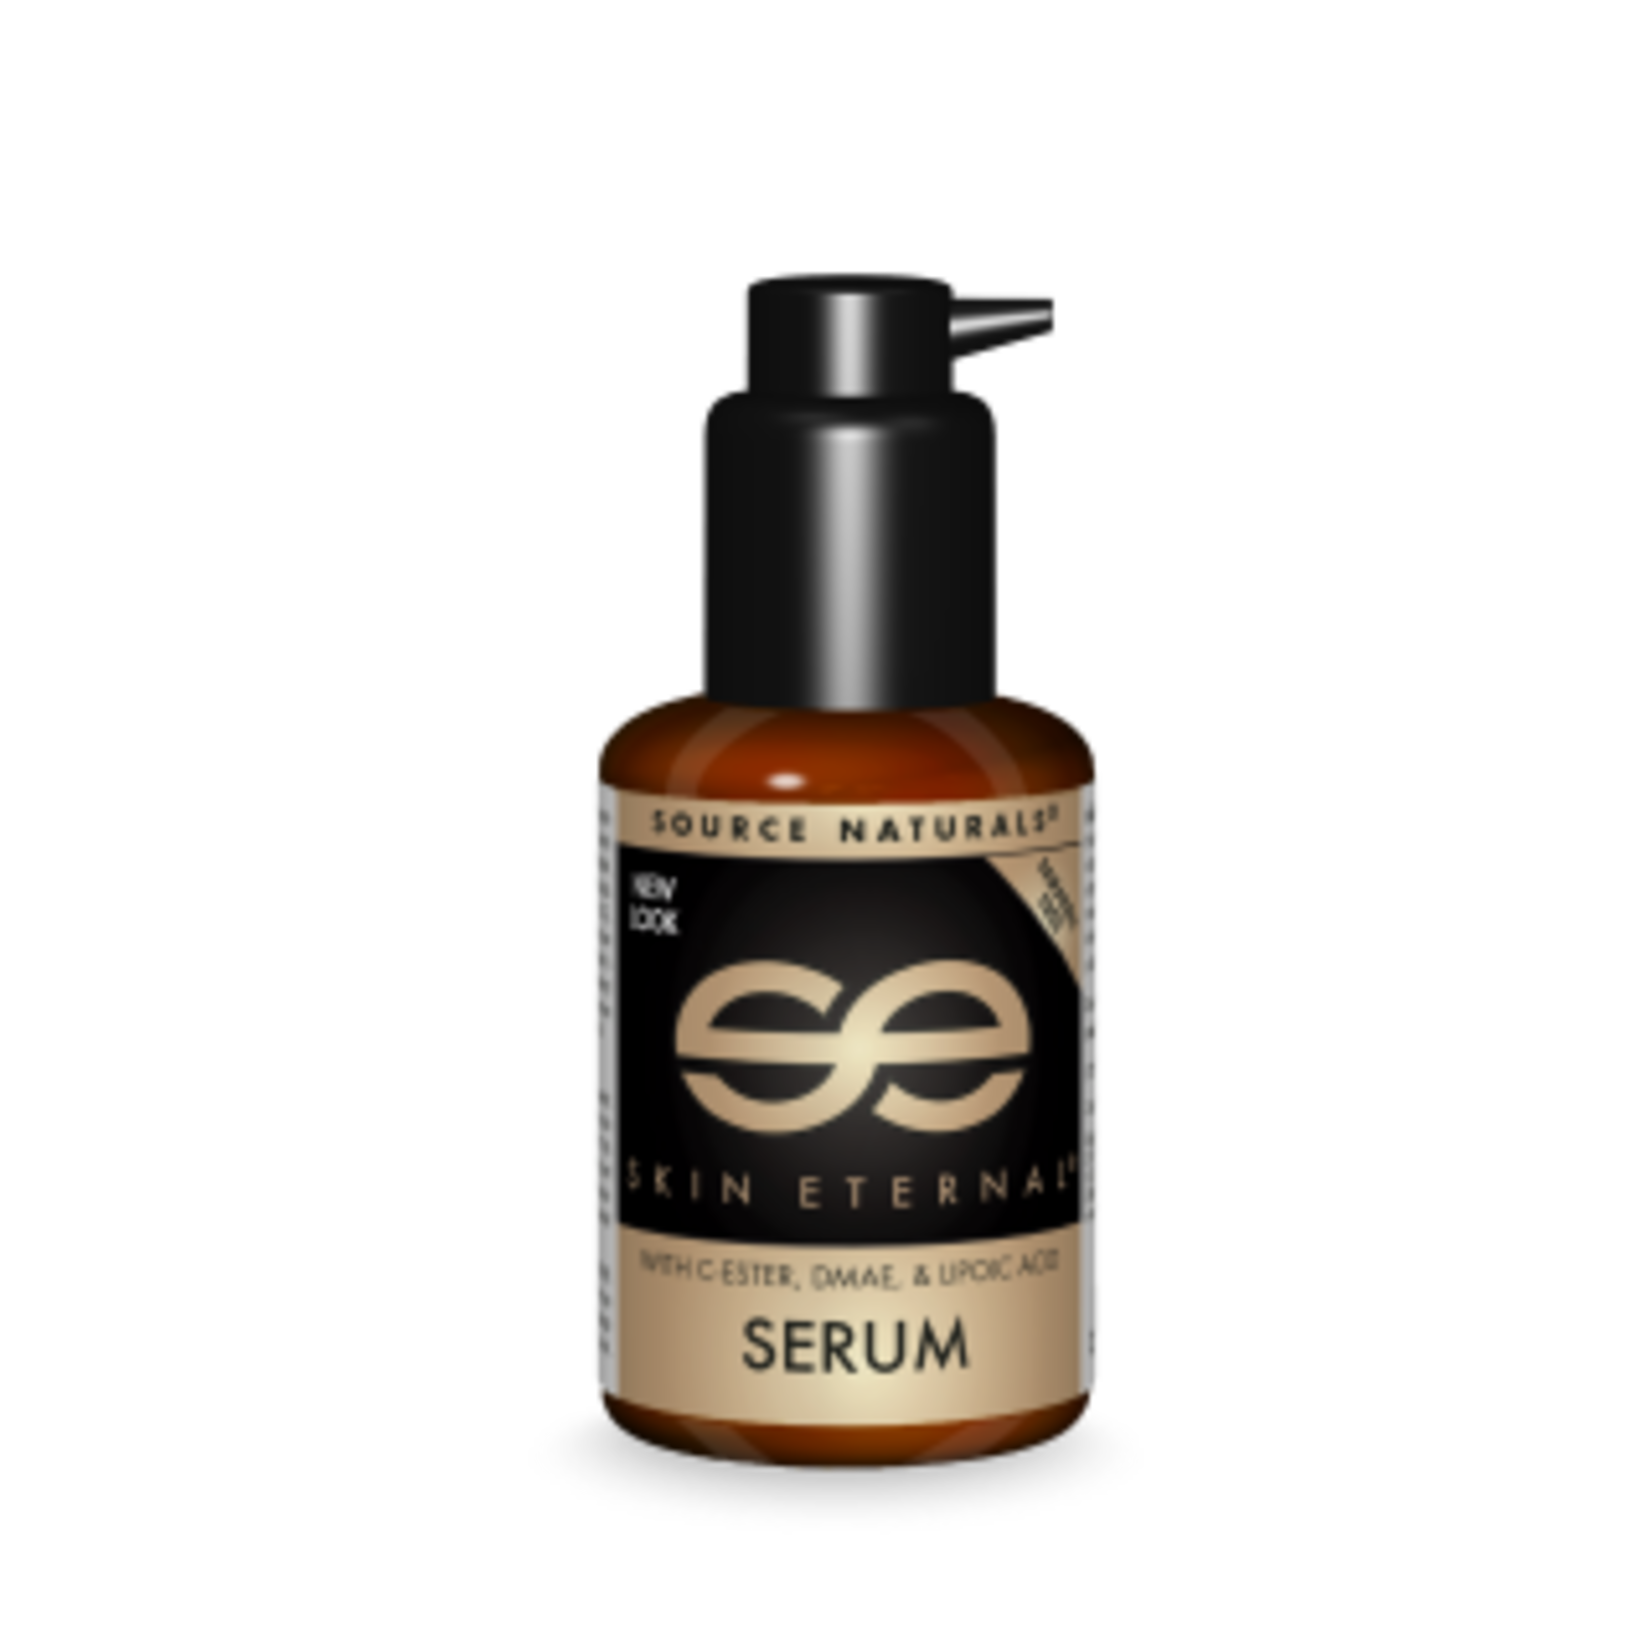 Source Naturals Source Naturals - Skin Eternal Serum - 1 oz